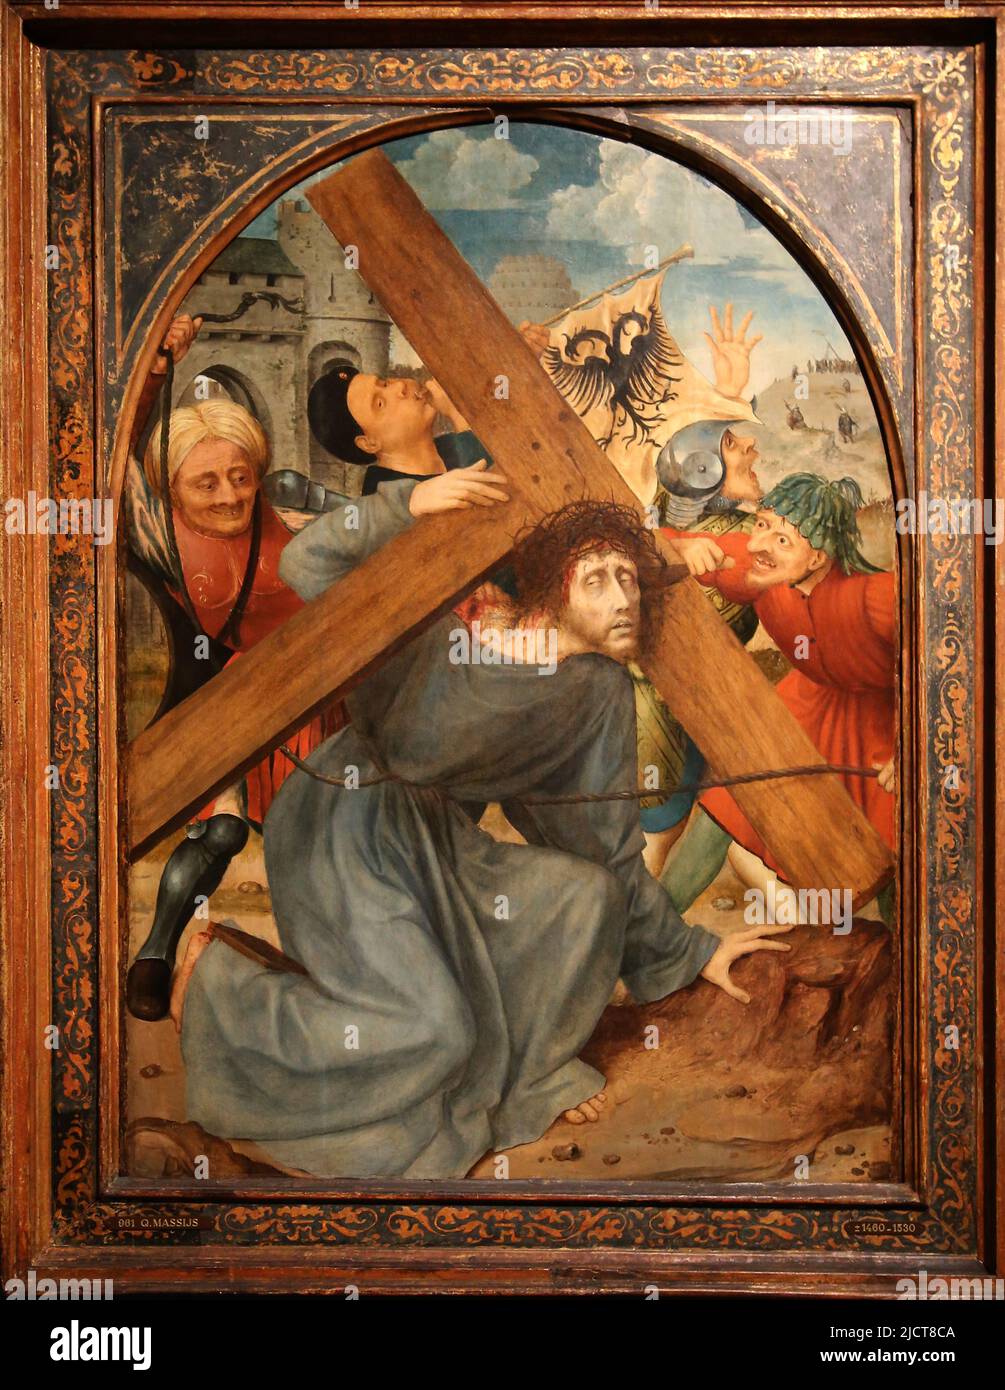 Christ Carrying the Cross, by Flemish painter Quinten Massijs (1466-1530). Antwerp, c. 1510-15. Oil on panel. Rijksmuseum. Amsterdam. Netherlands. Stock Photo